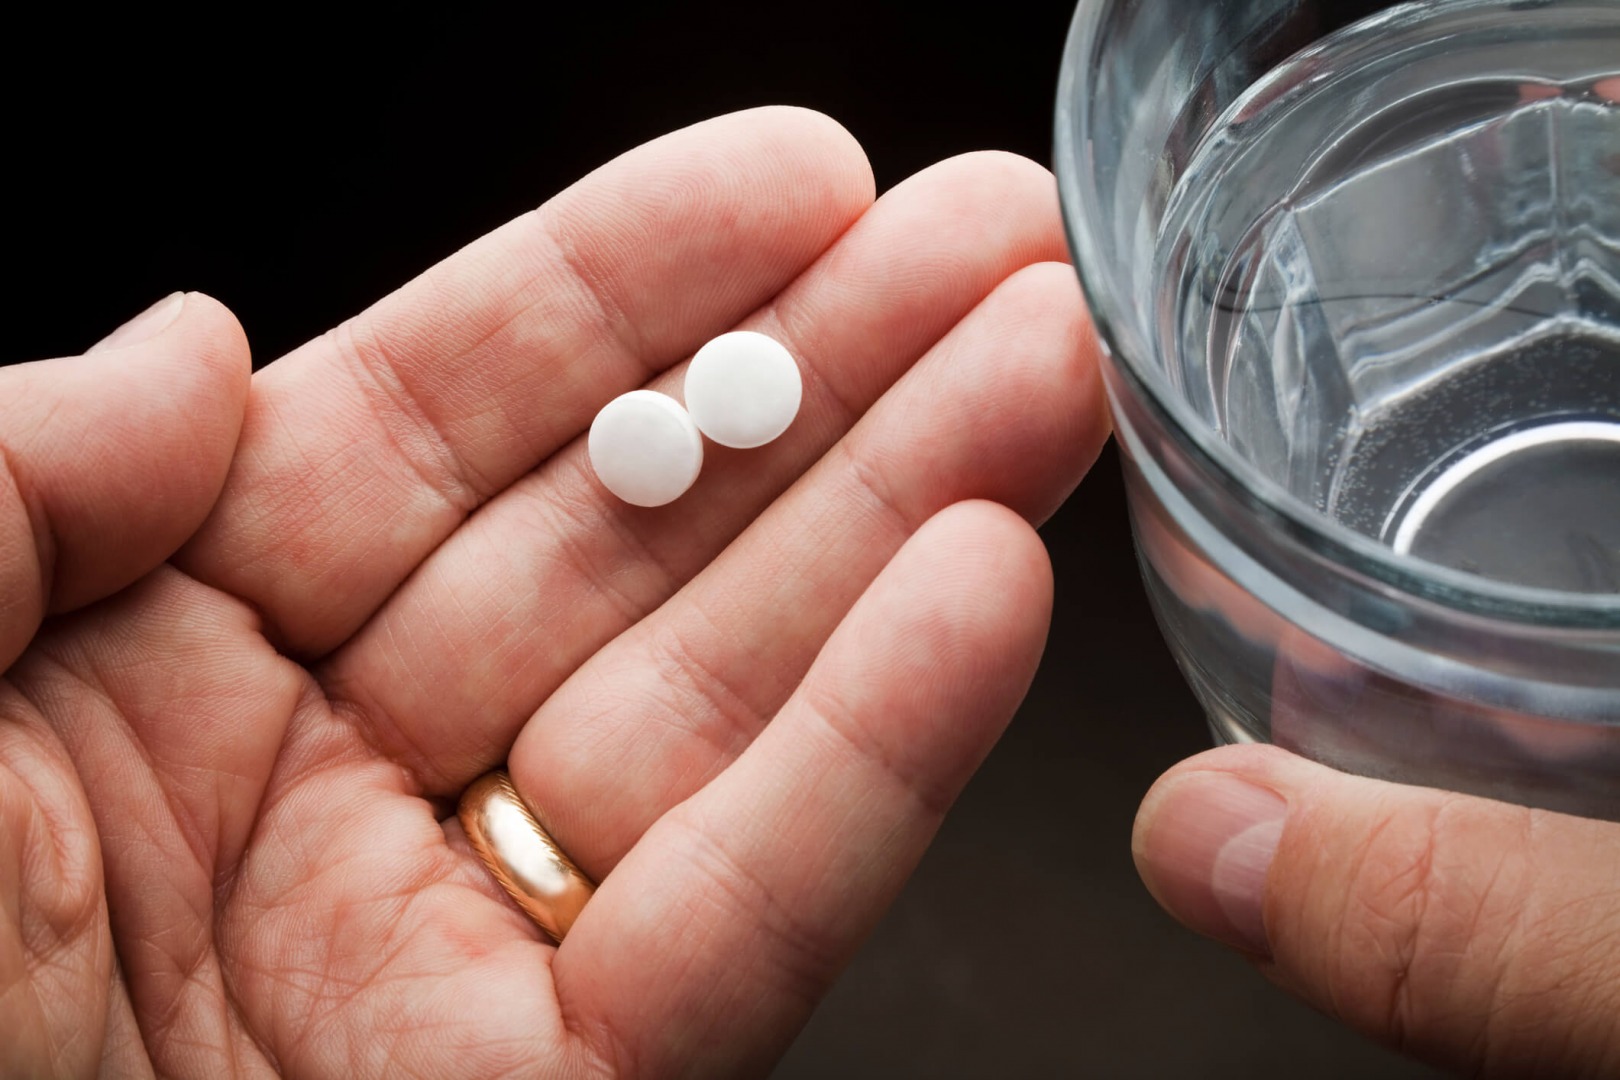 Should You Take Aspirin?